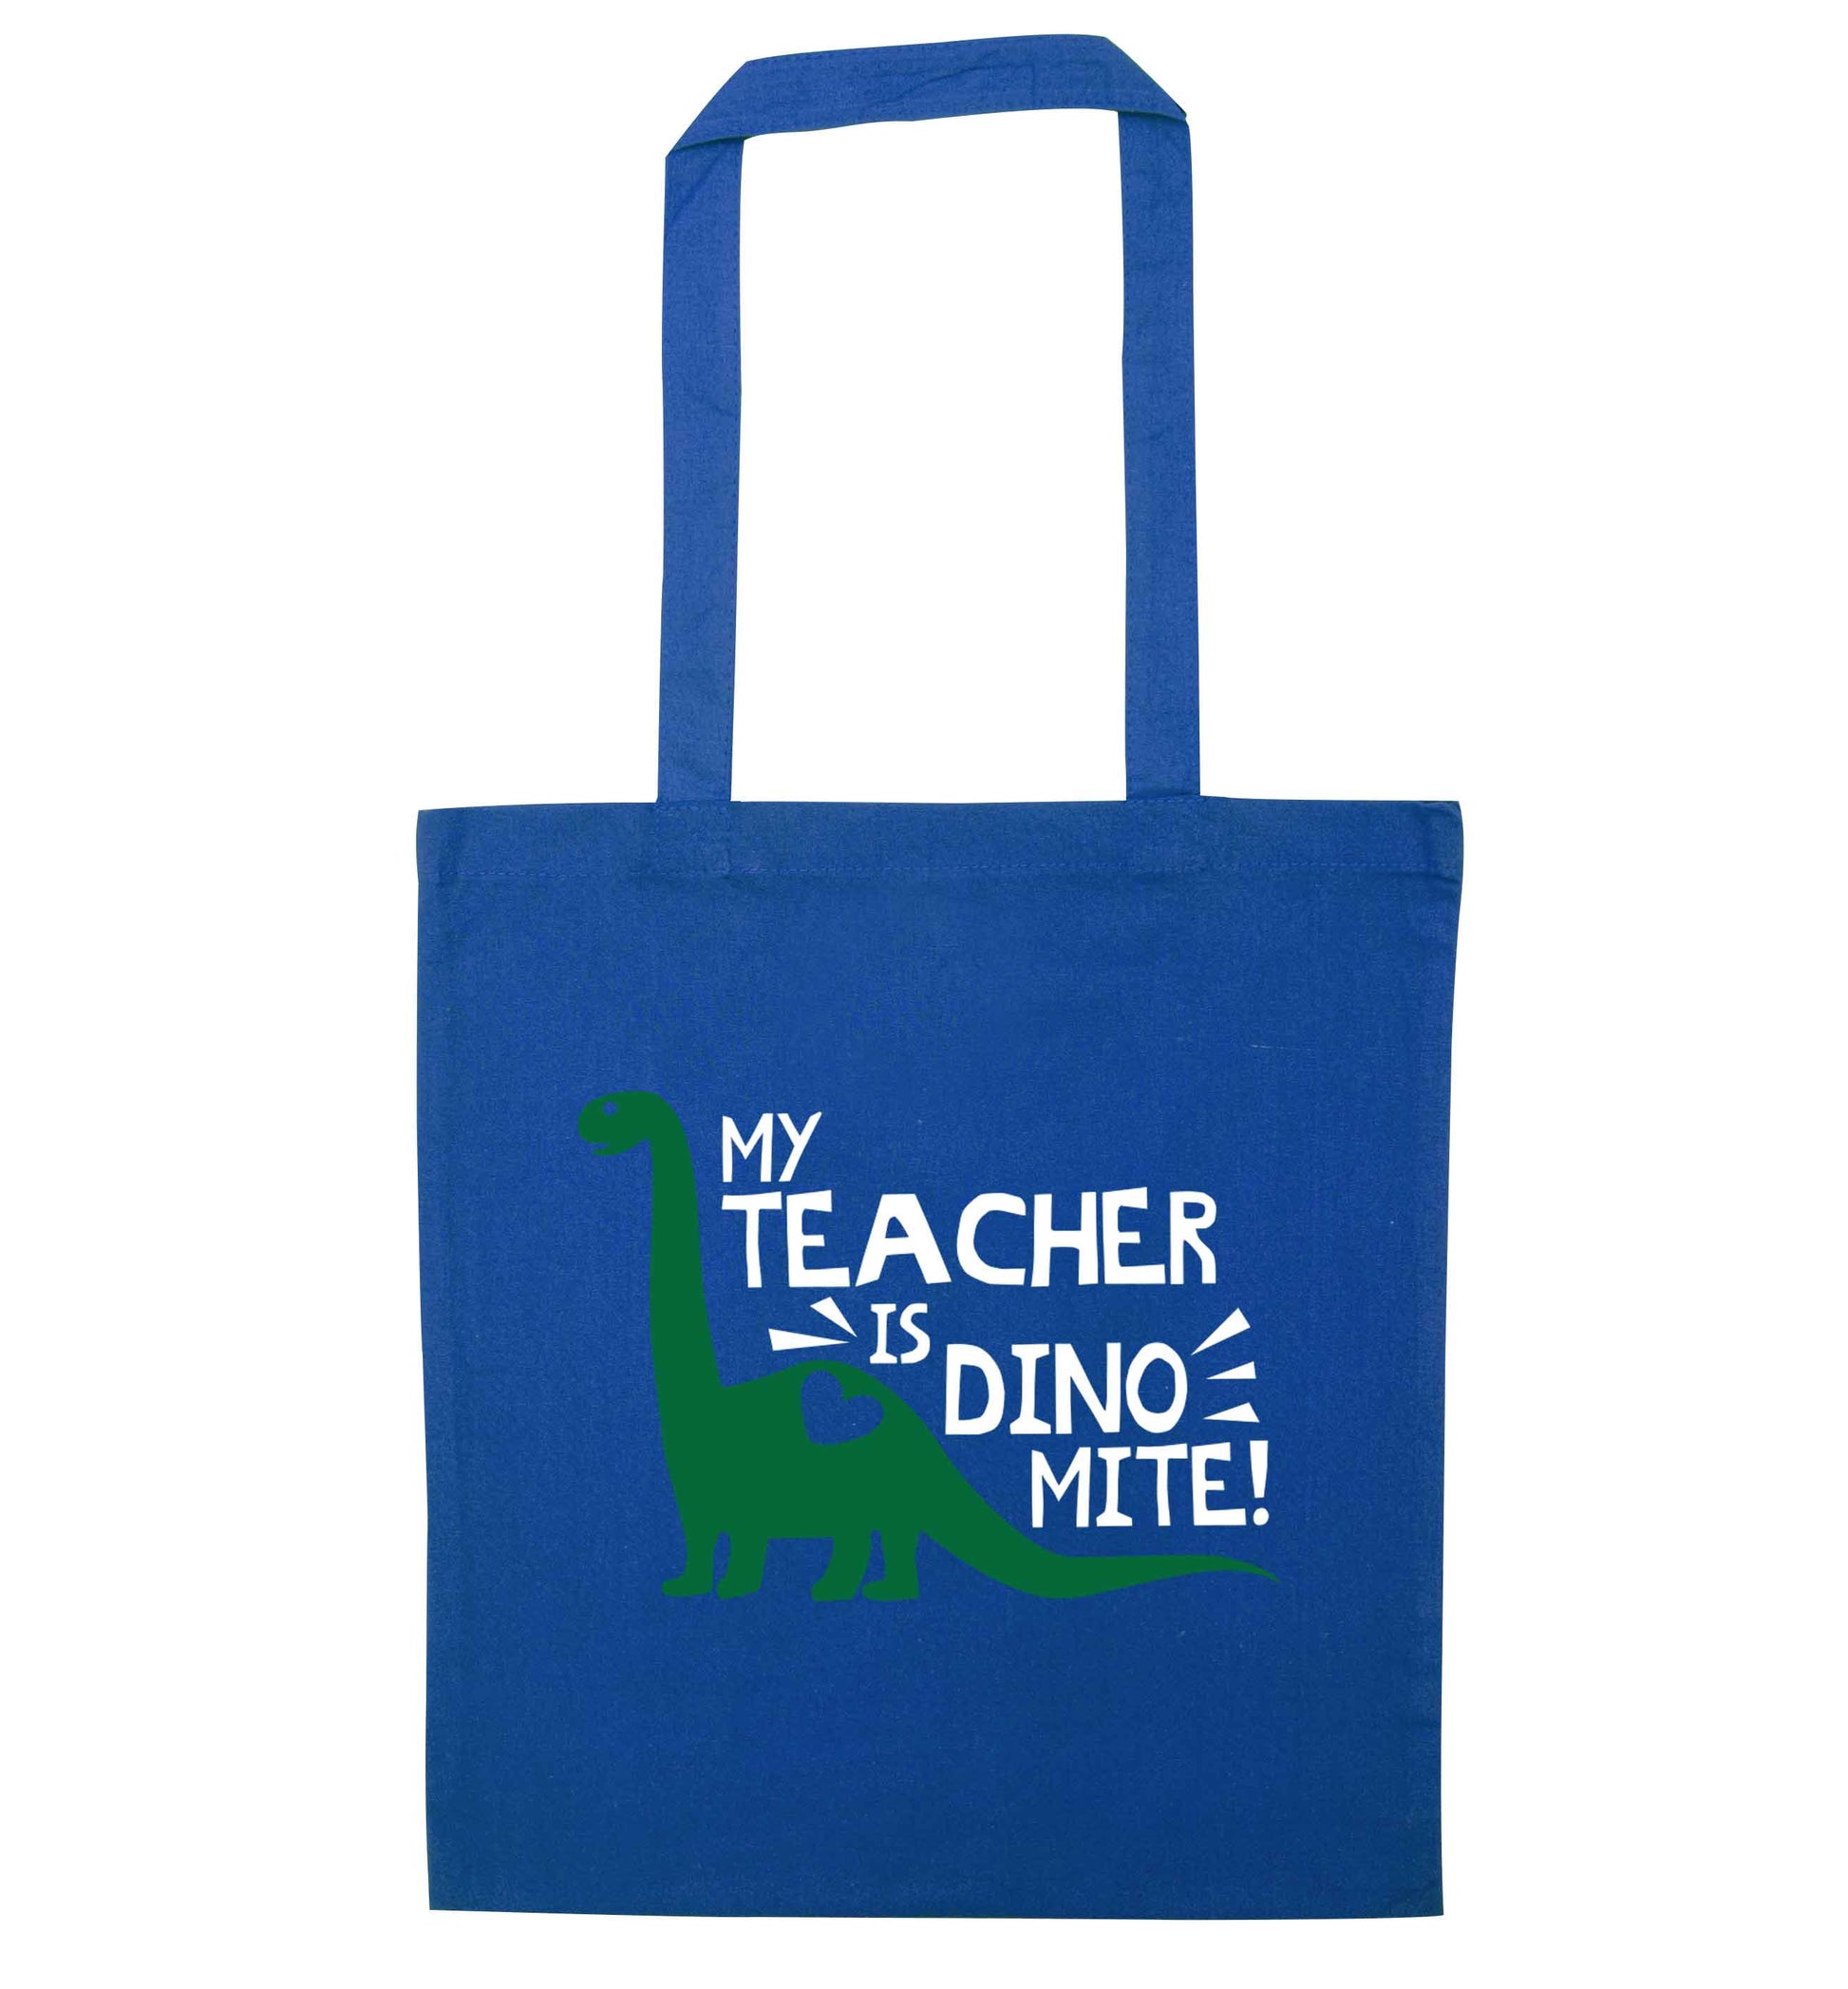 My teacher is dinomite! blue tote bag